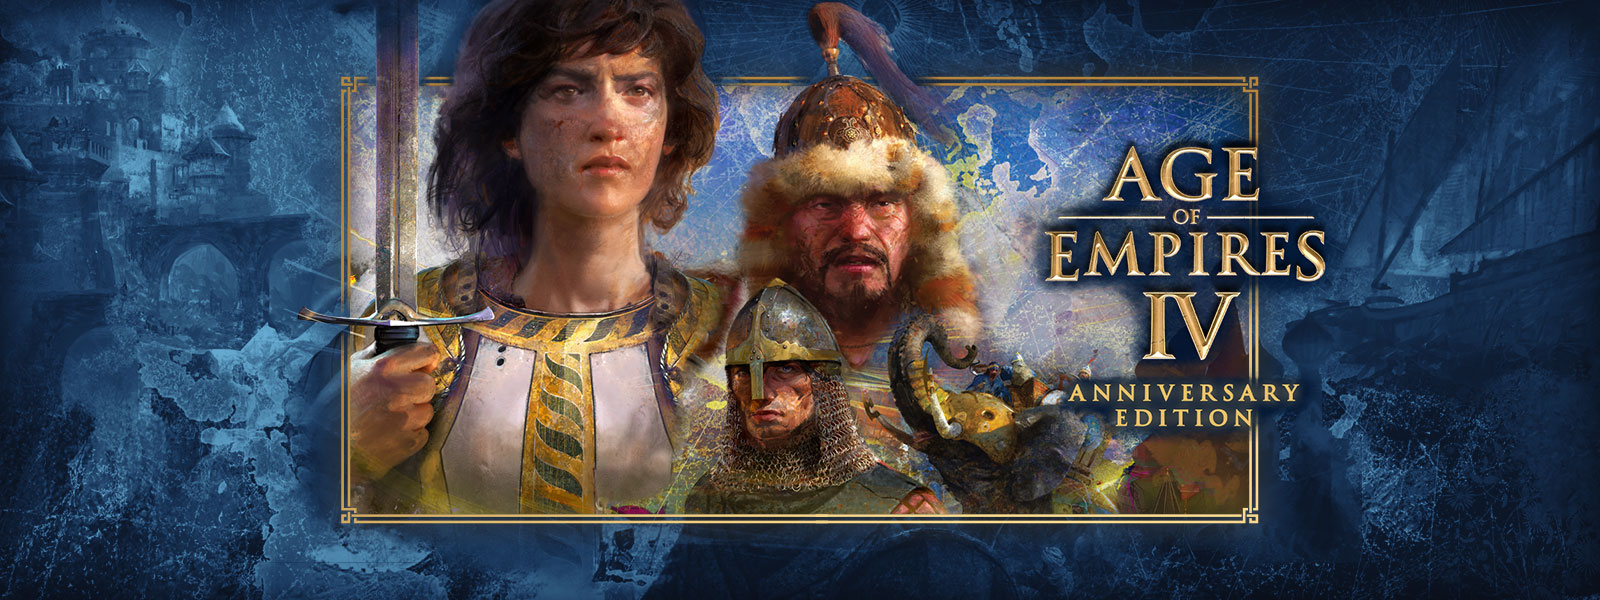 Age of Empires IV: Anniversary Edition. Tre figurer med scener av krig og pansrede elefanter rundt dem.